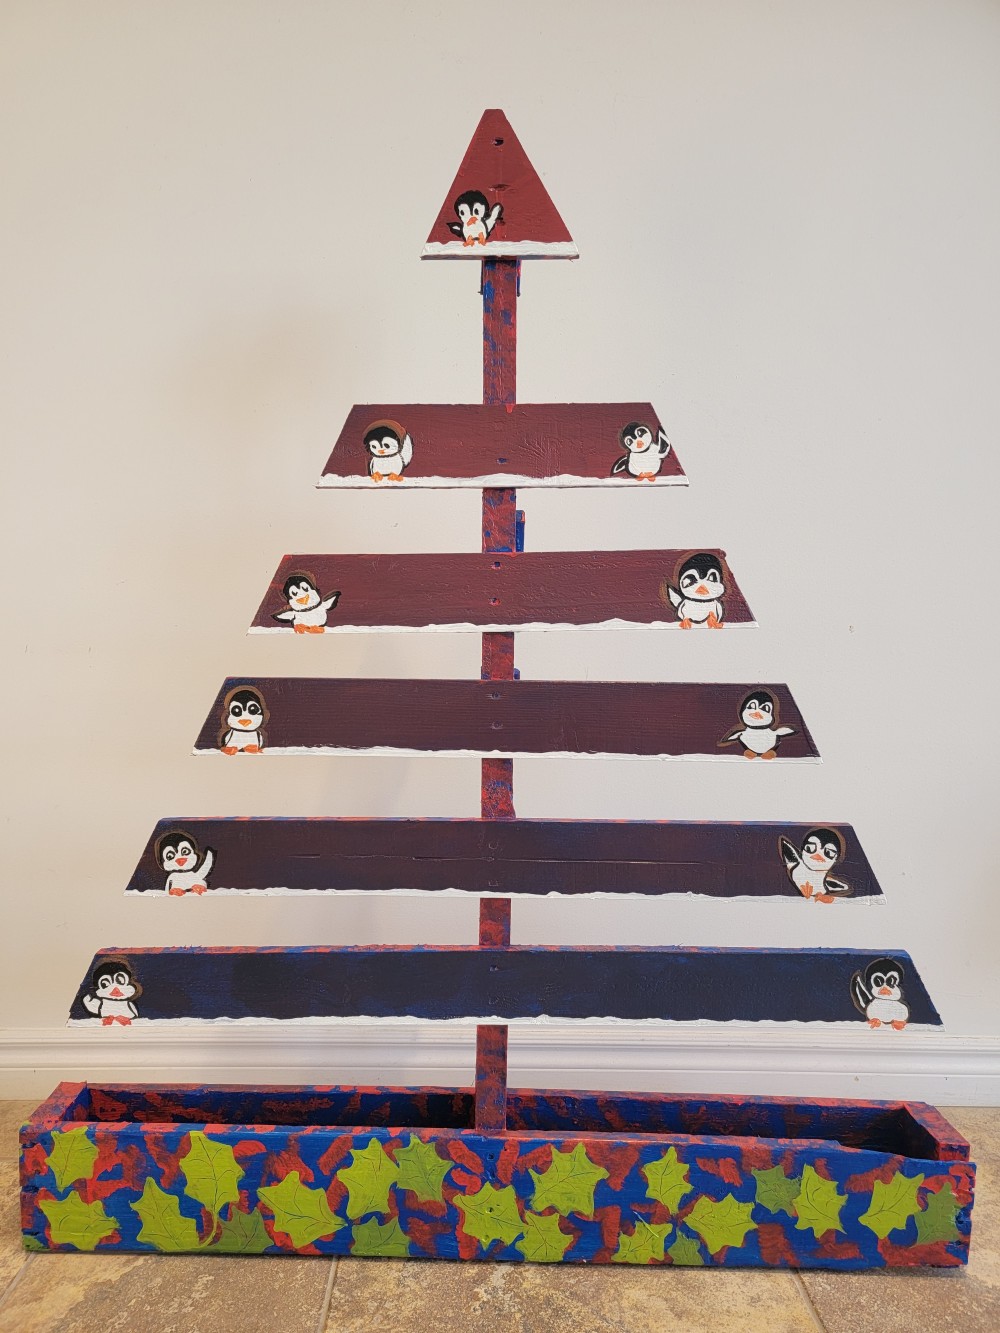 2022 Fundraising Painted Christmas Tree